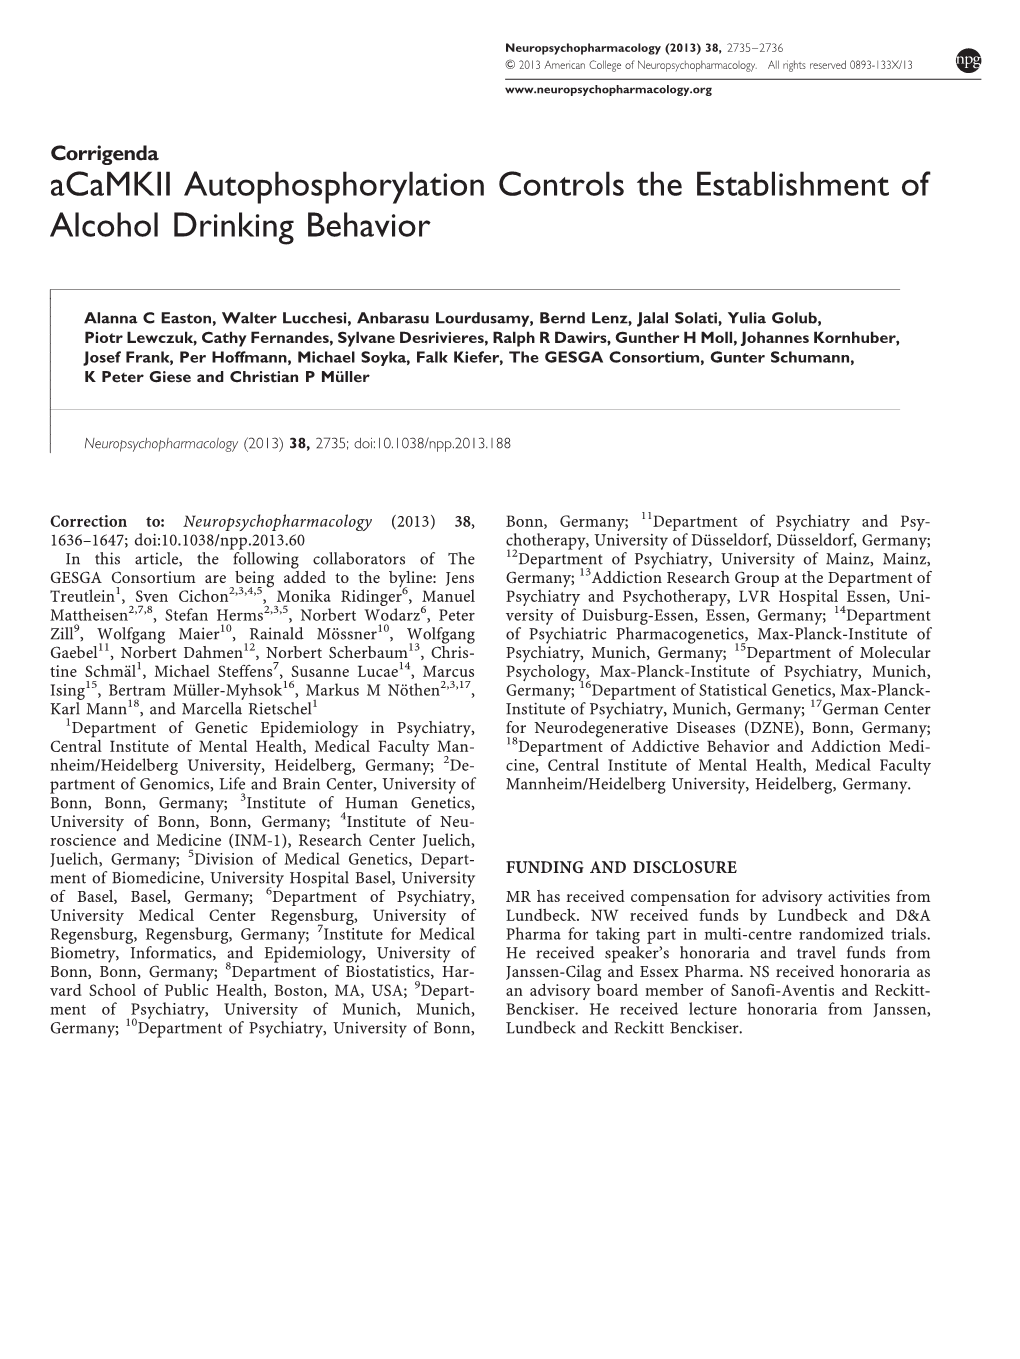 Acamkii Autophosphorylation Controls the Establishment of Alcohol Drinking Behavior